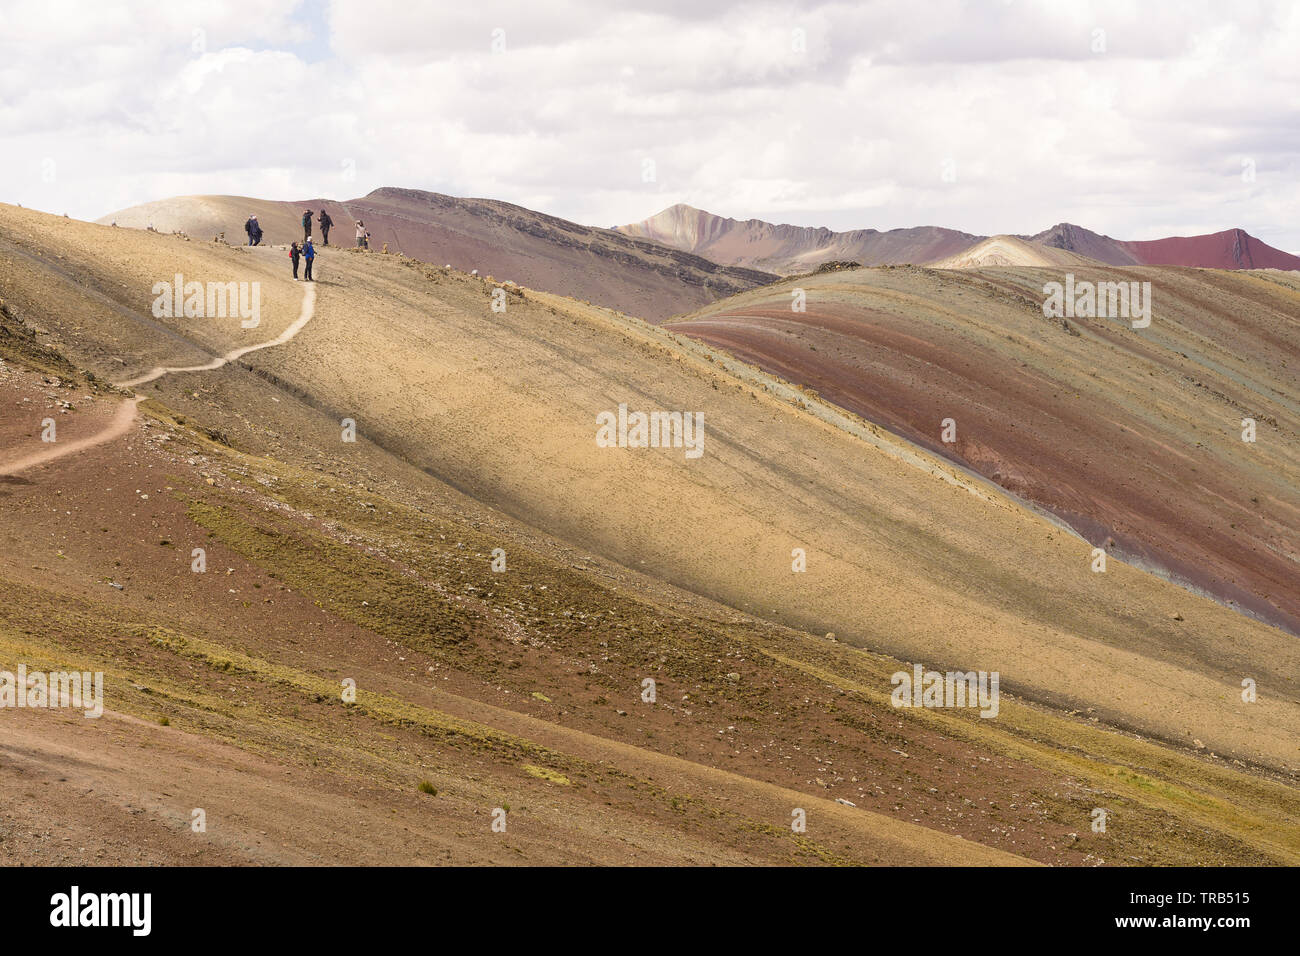 Peru Palccoyo Berg (alternative Rainbow Berg) - Leute Trekking entlang den Hängen der bunten Palccoyo Berg in Peru, Südamerika. Stockfoto